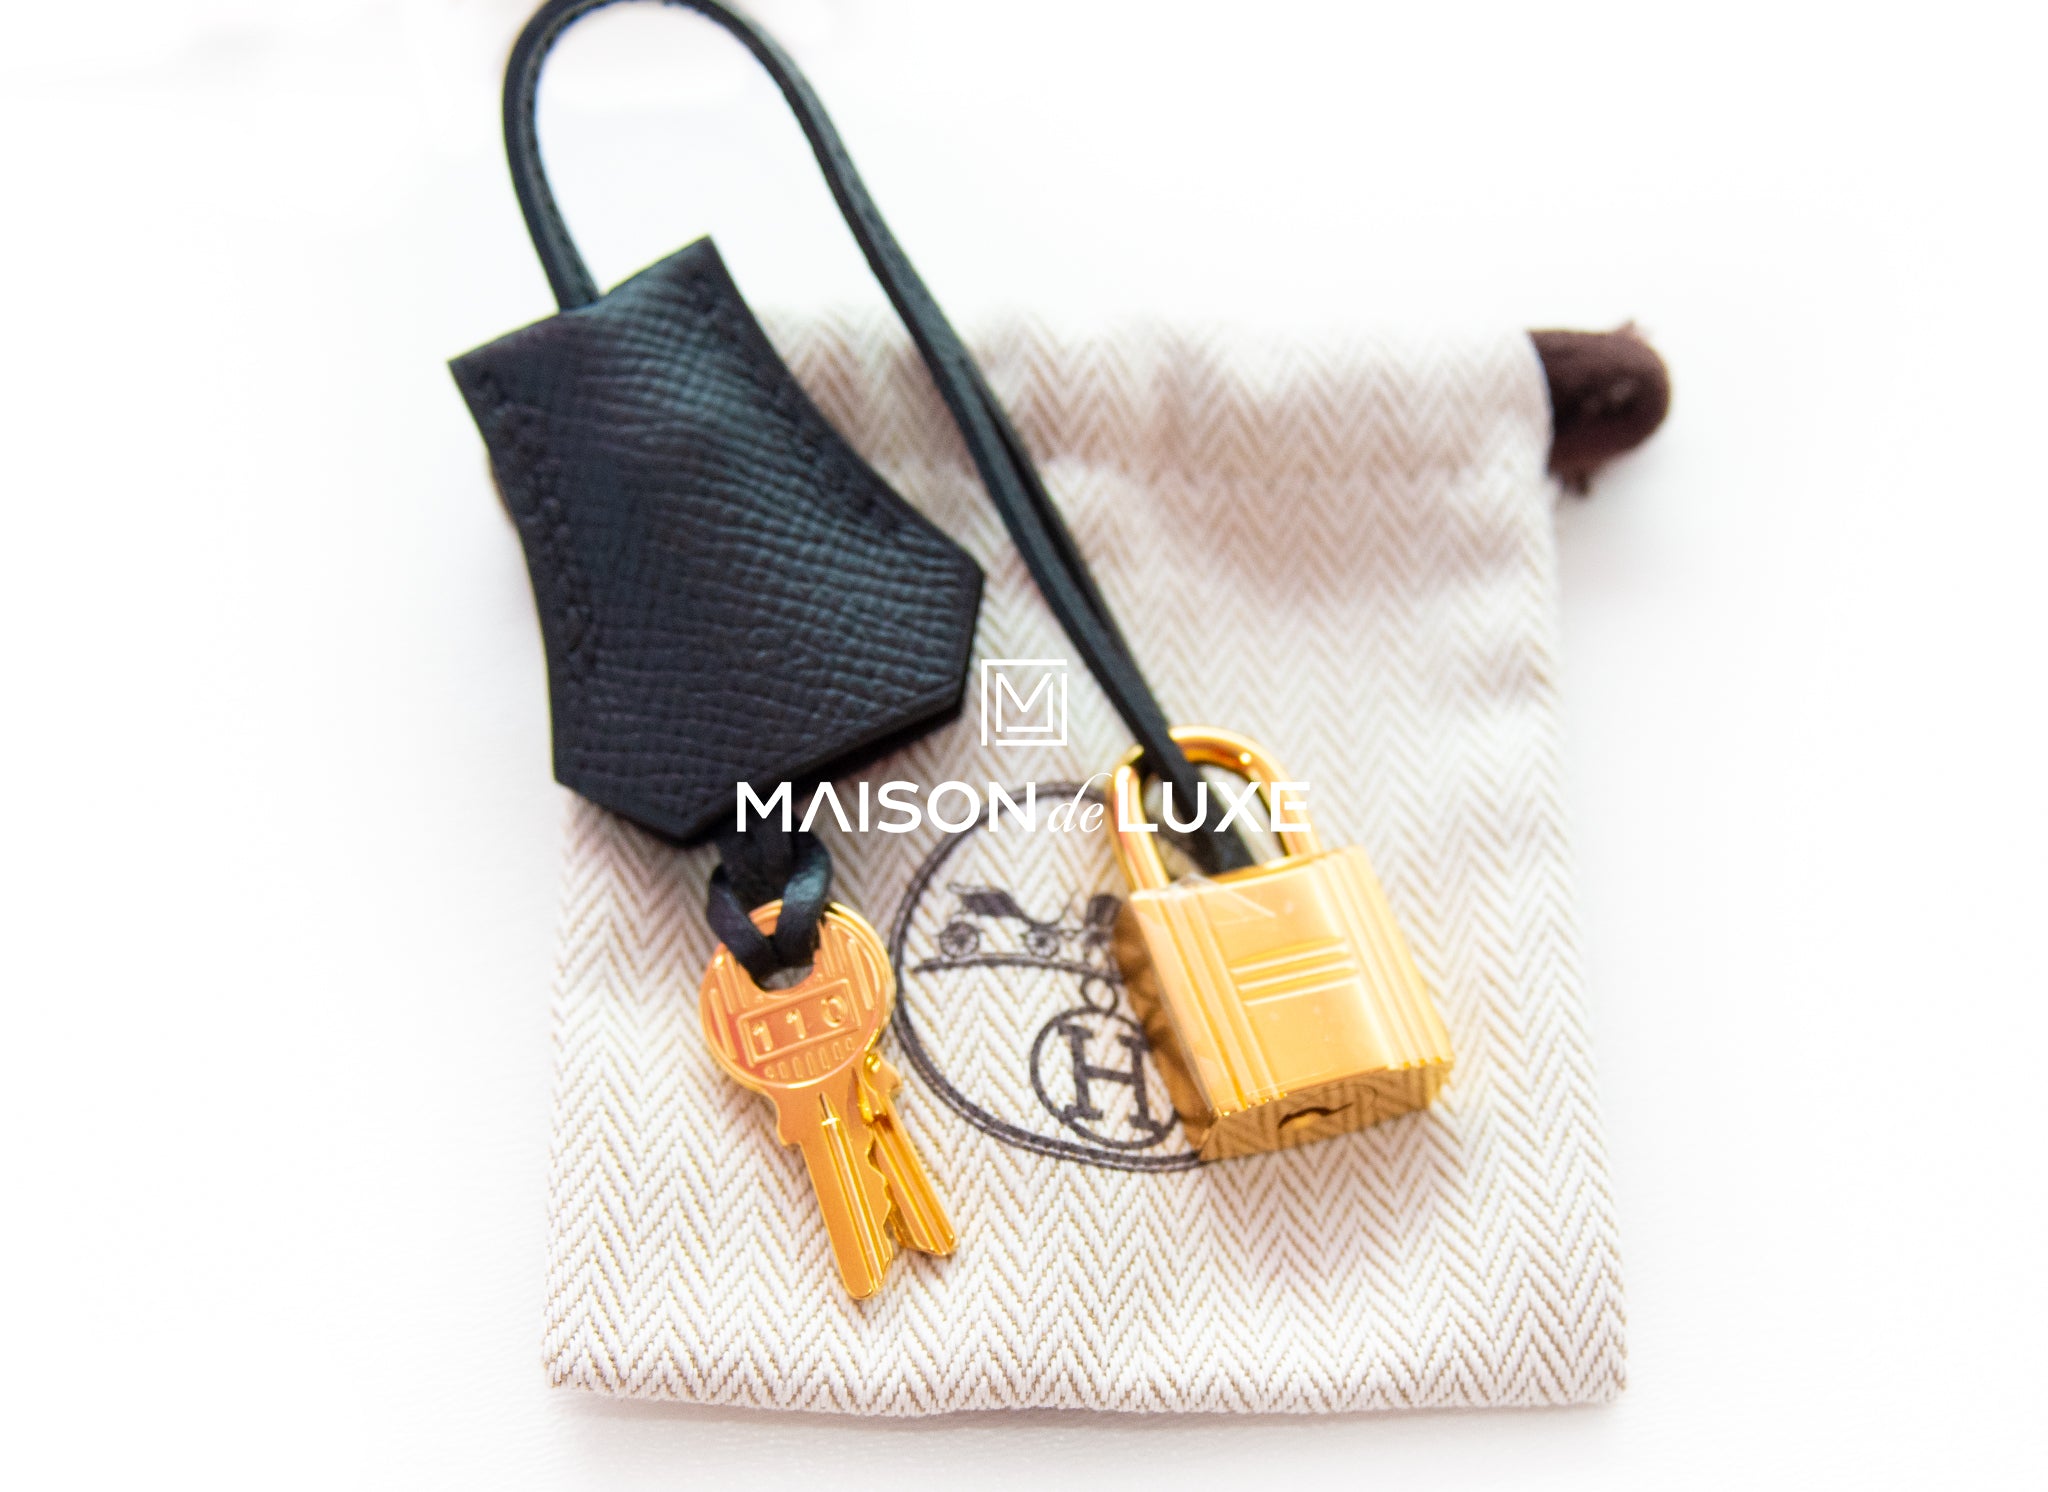 Hermès Kelly 25 Sellier Black Epsom with Gold Hardware